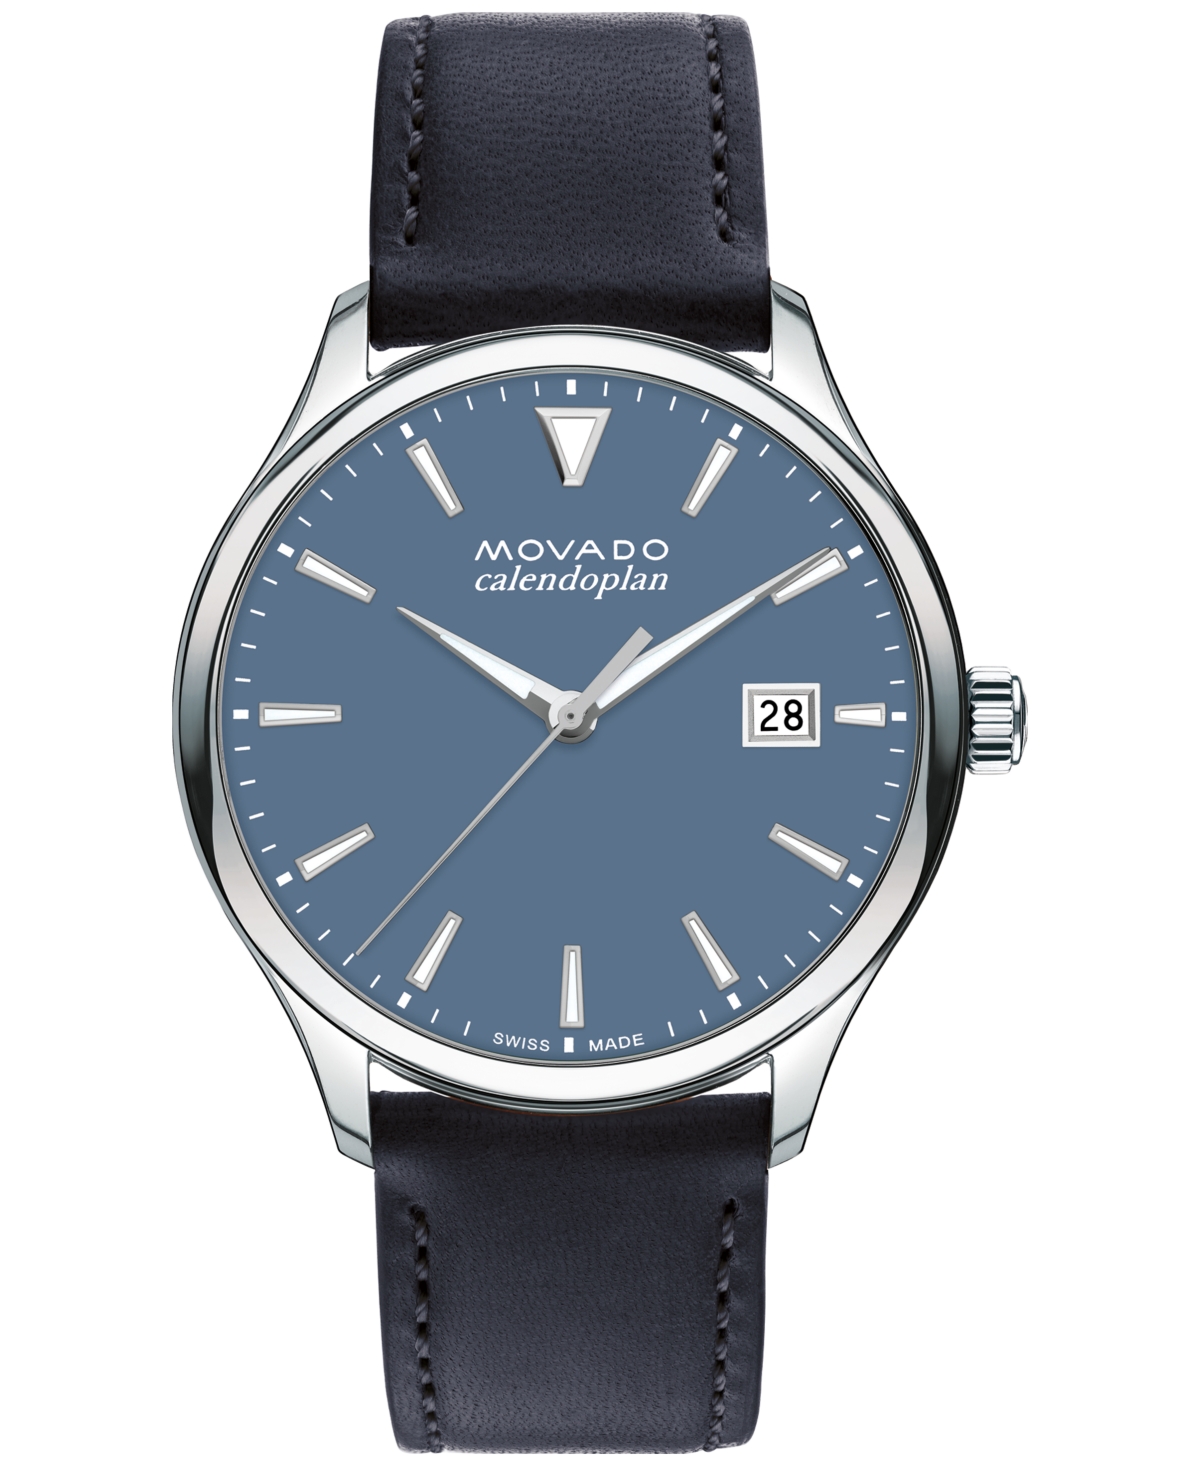 Shop Movado Men's Swiss Calendoplan Blue Leather Strap Watch 40mm